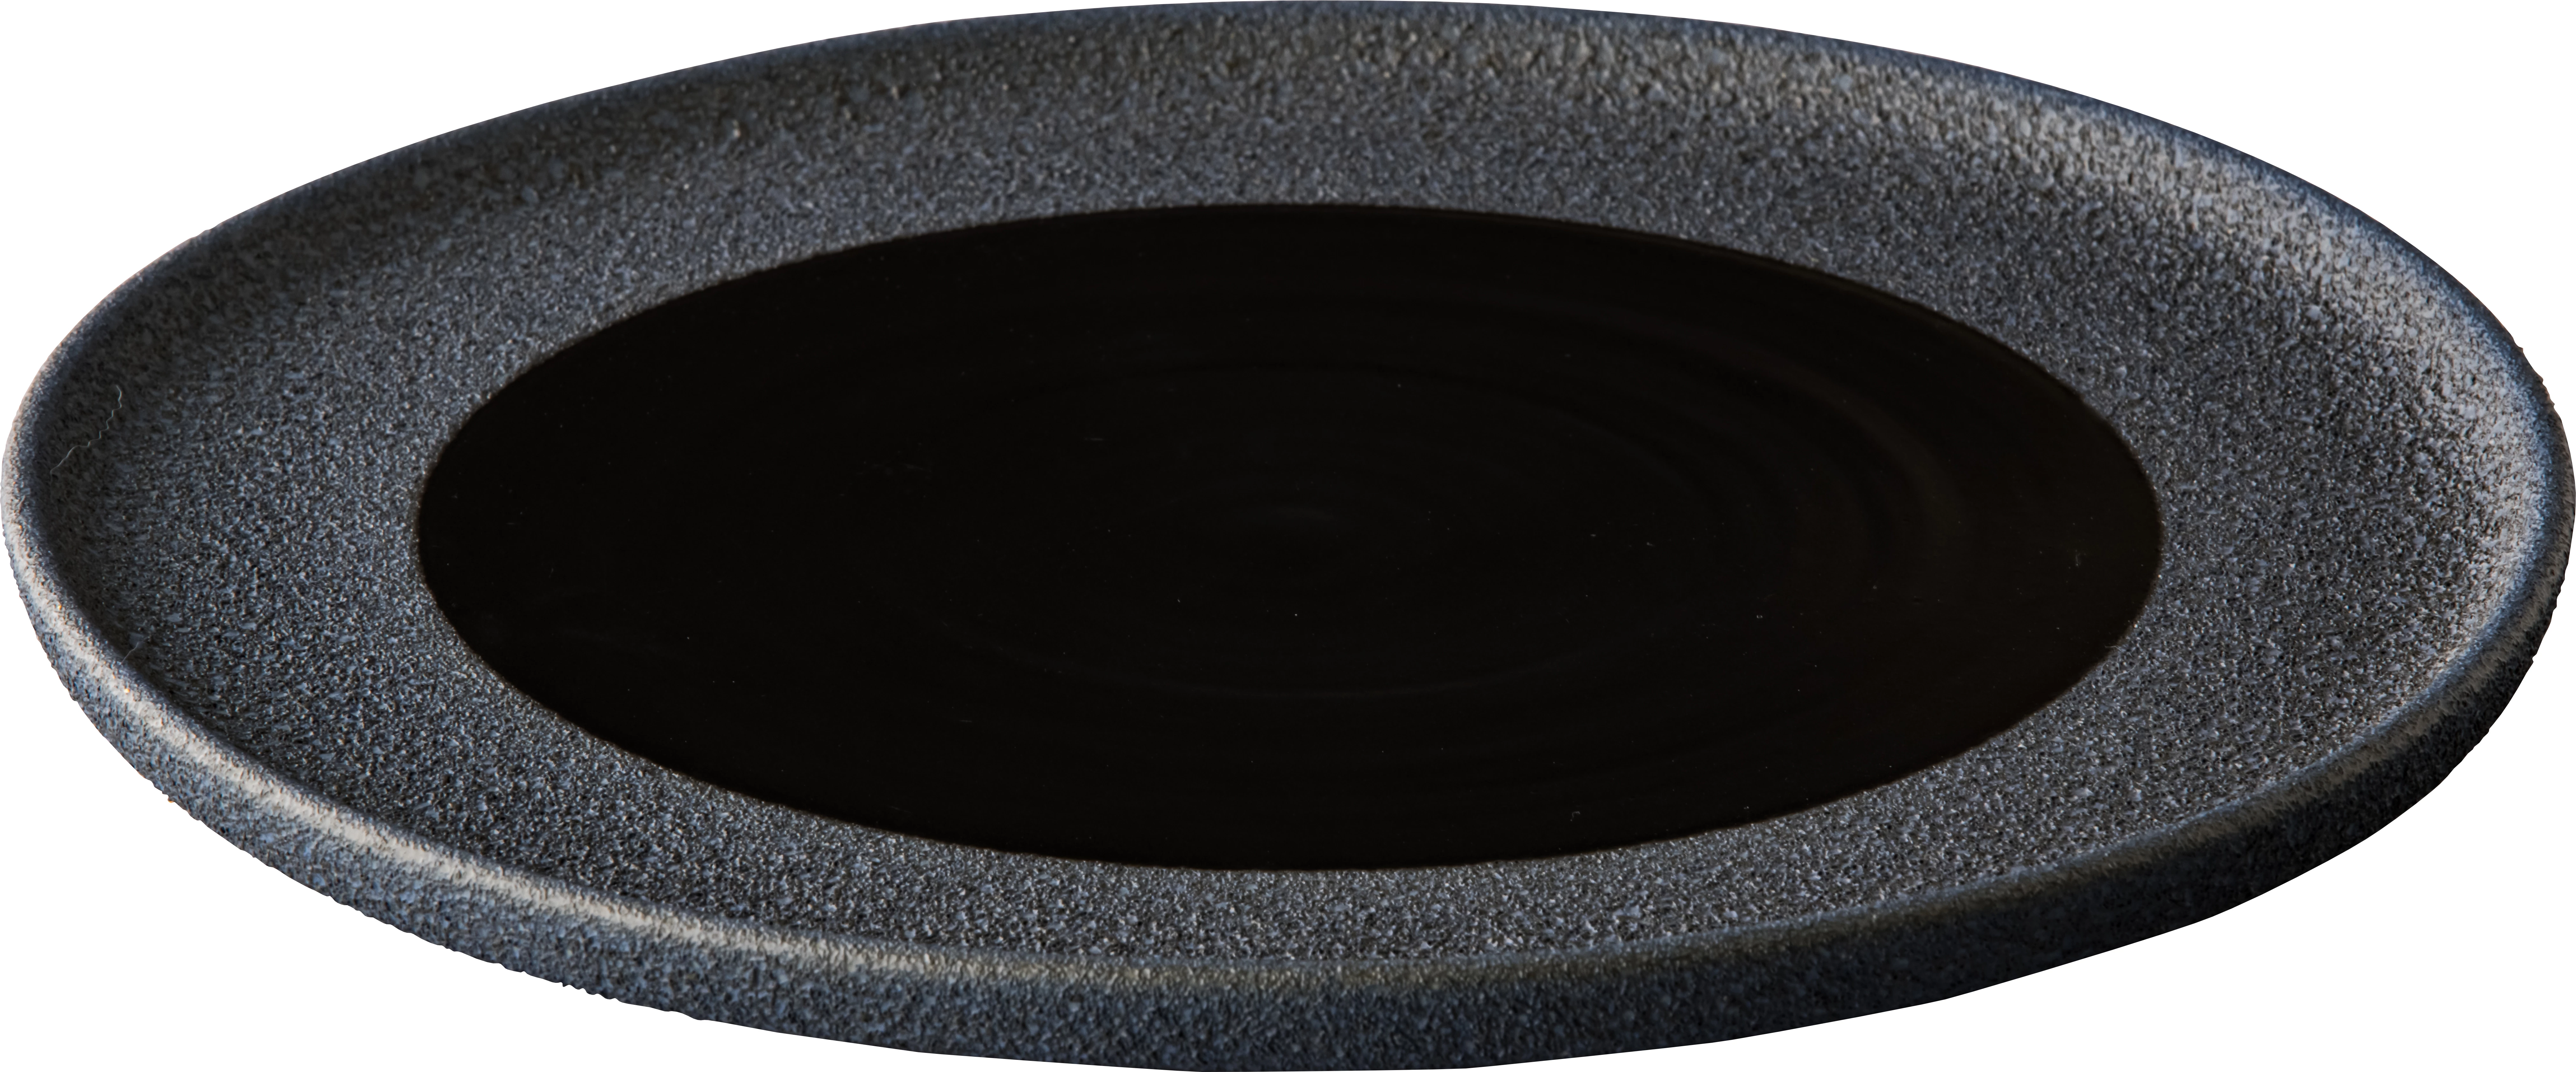 Studio Raw flad tallerken, sort, ø28 cm